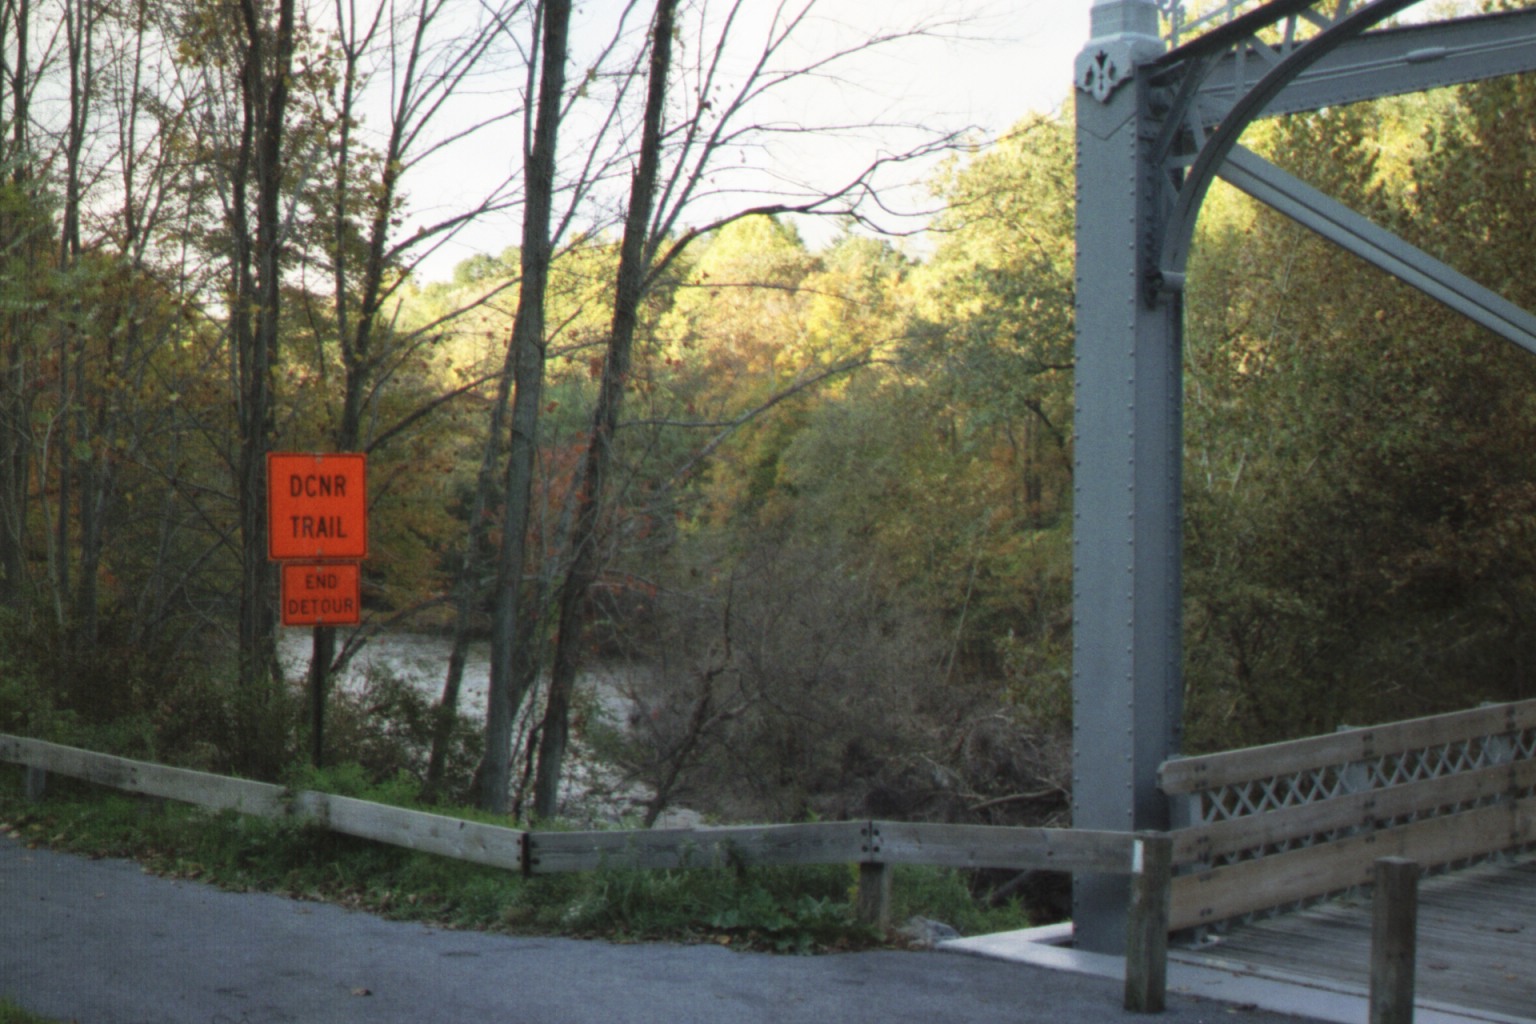 mm 20.6 - Old iron bridge area at Swatara Gap. Courtesy at@rohland.org